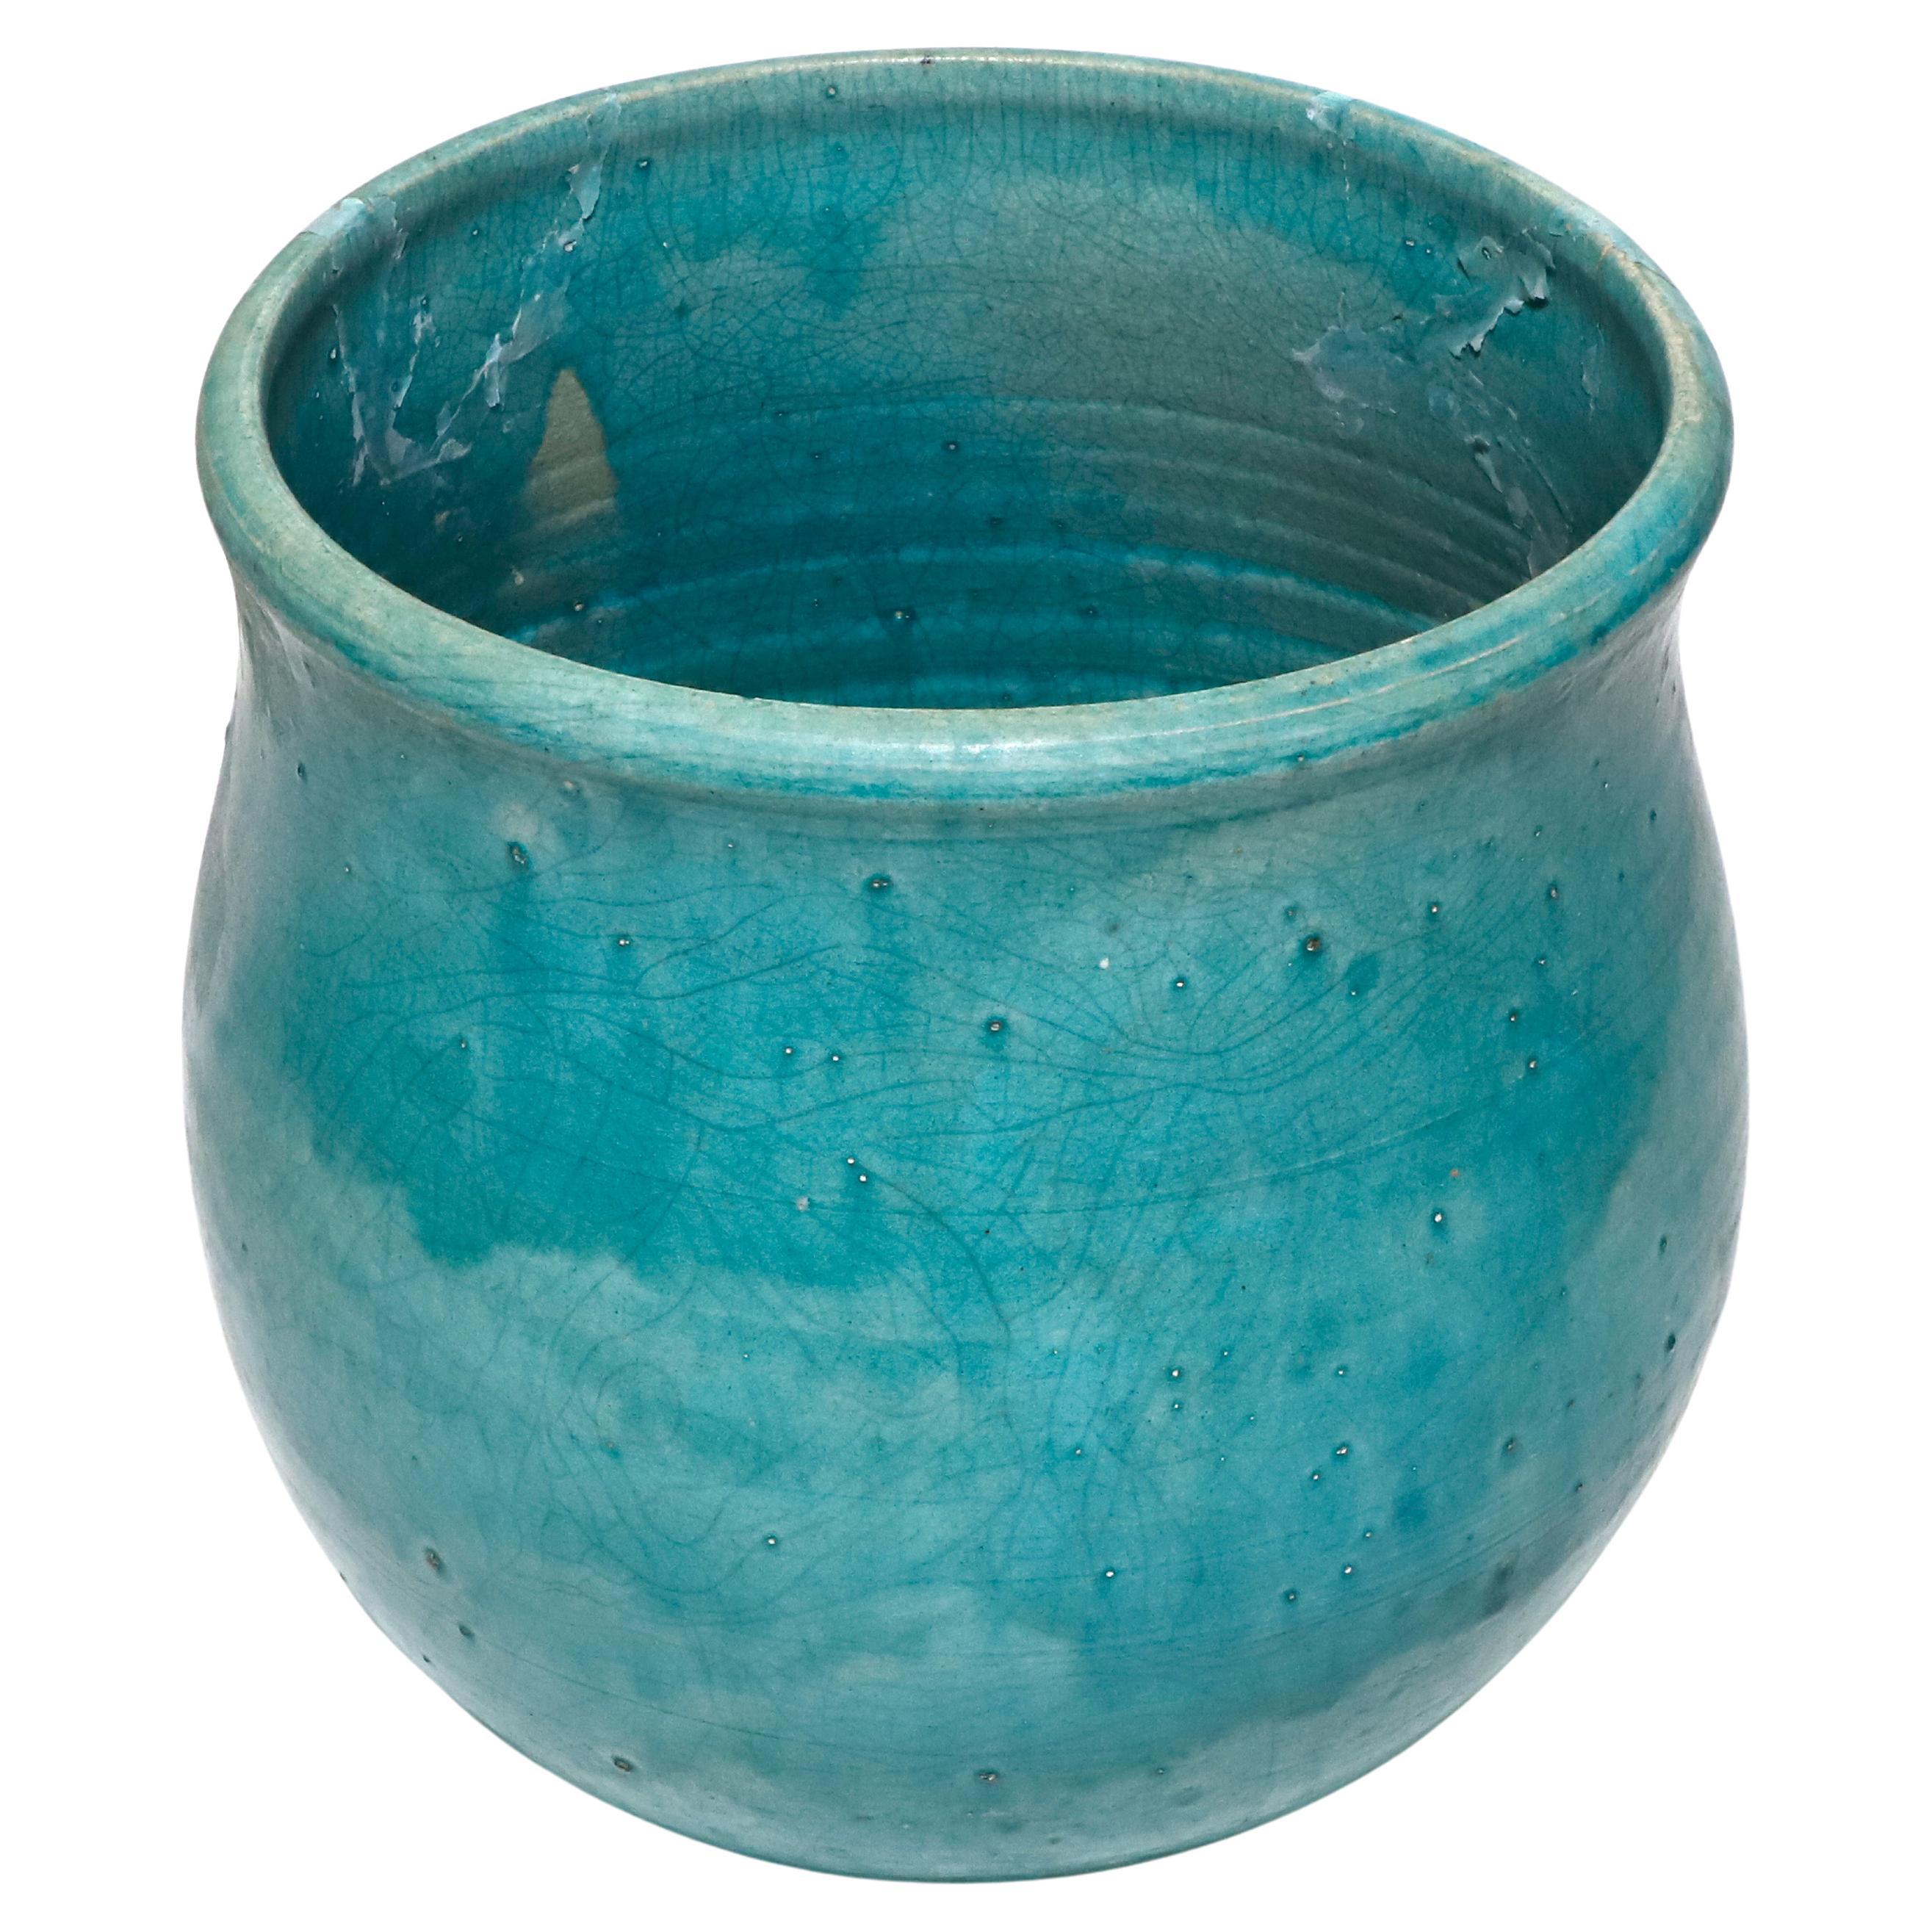 Geoffrey Borr Turquoise Glaze Pottery Vase Signed For Sale